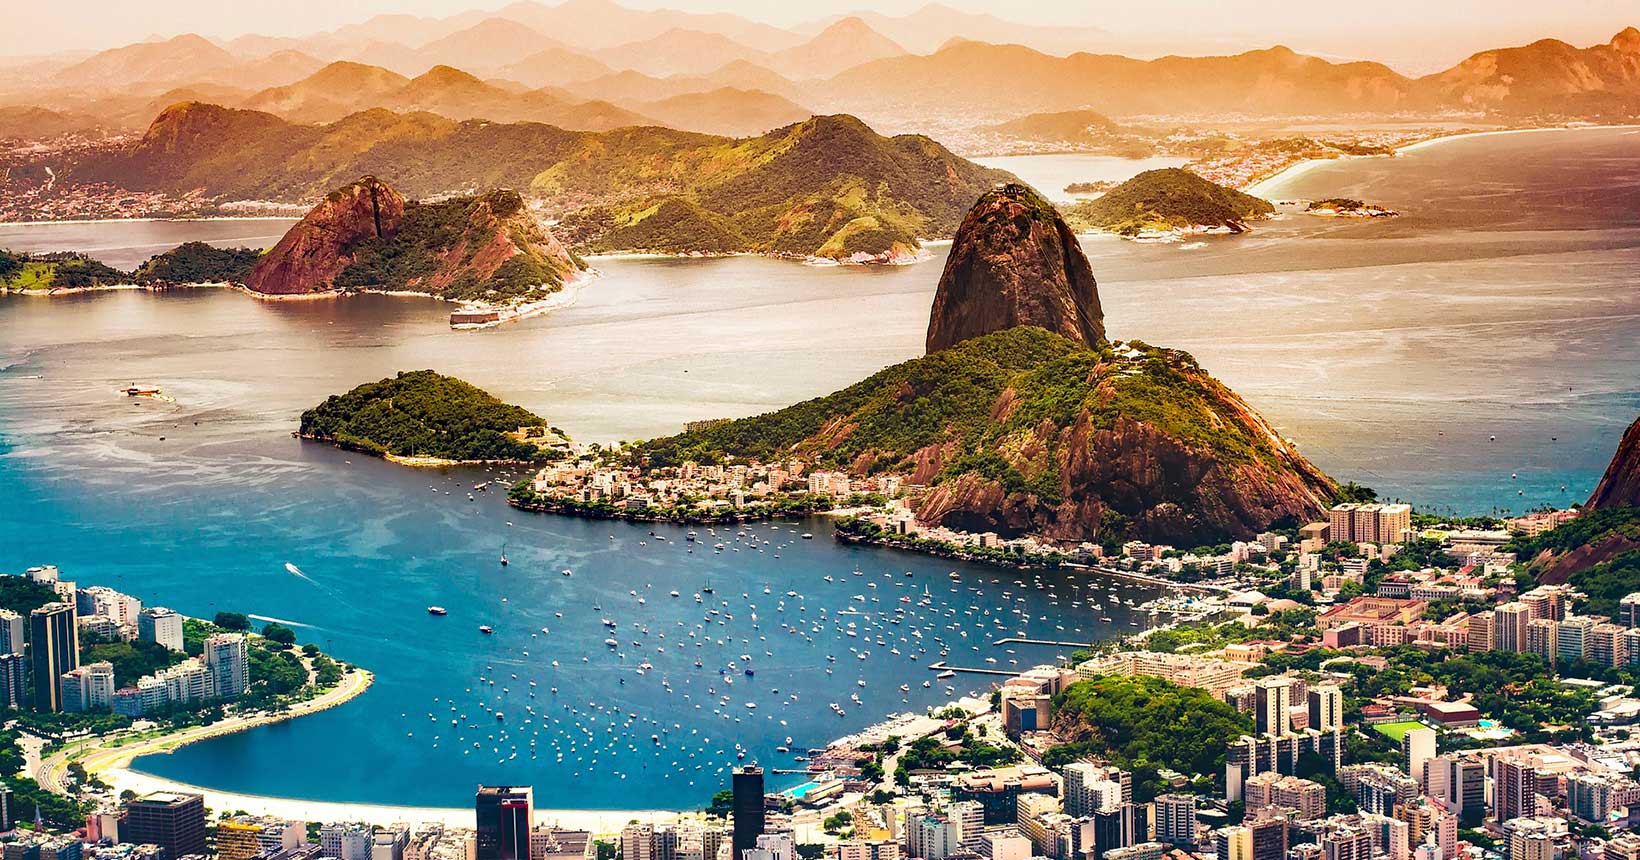 Destinos Inusitados no Rio de Janeiro Descobrindo Lugares Menos Conhecidos e Surpreendentes